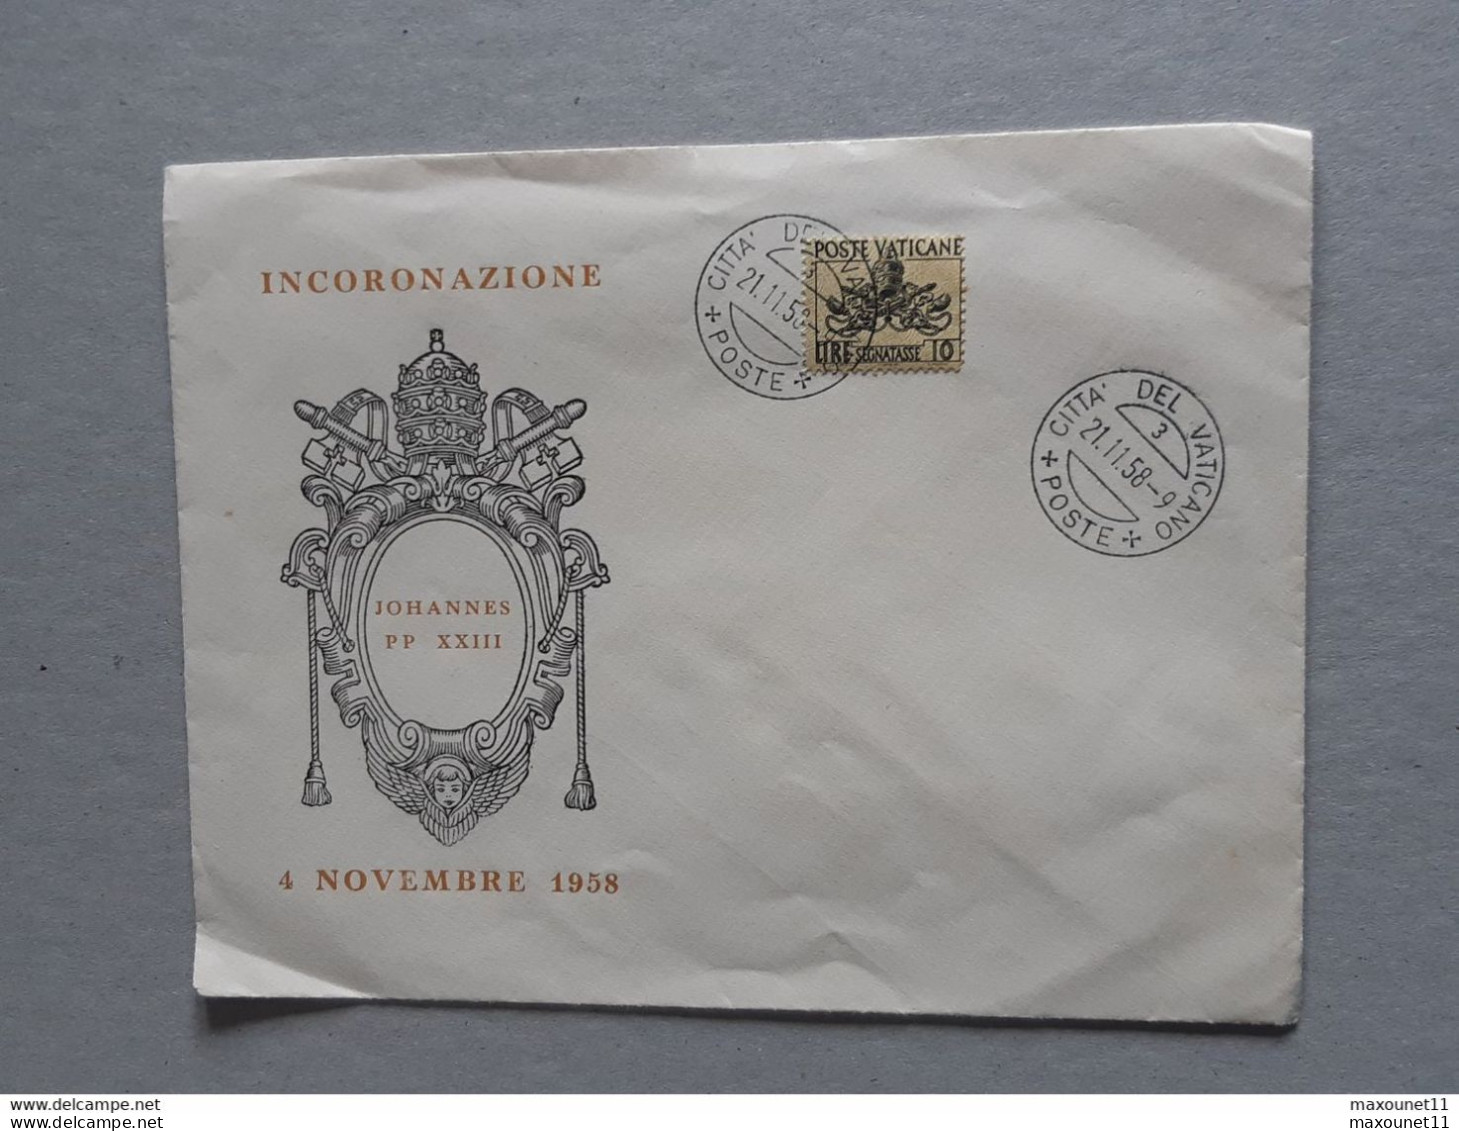 Enveloppe Poste Vaticane - Citta Del Vaticano - Incoronazione Johannes PP XXIII ... Lot430 . - Covers & Documents